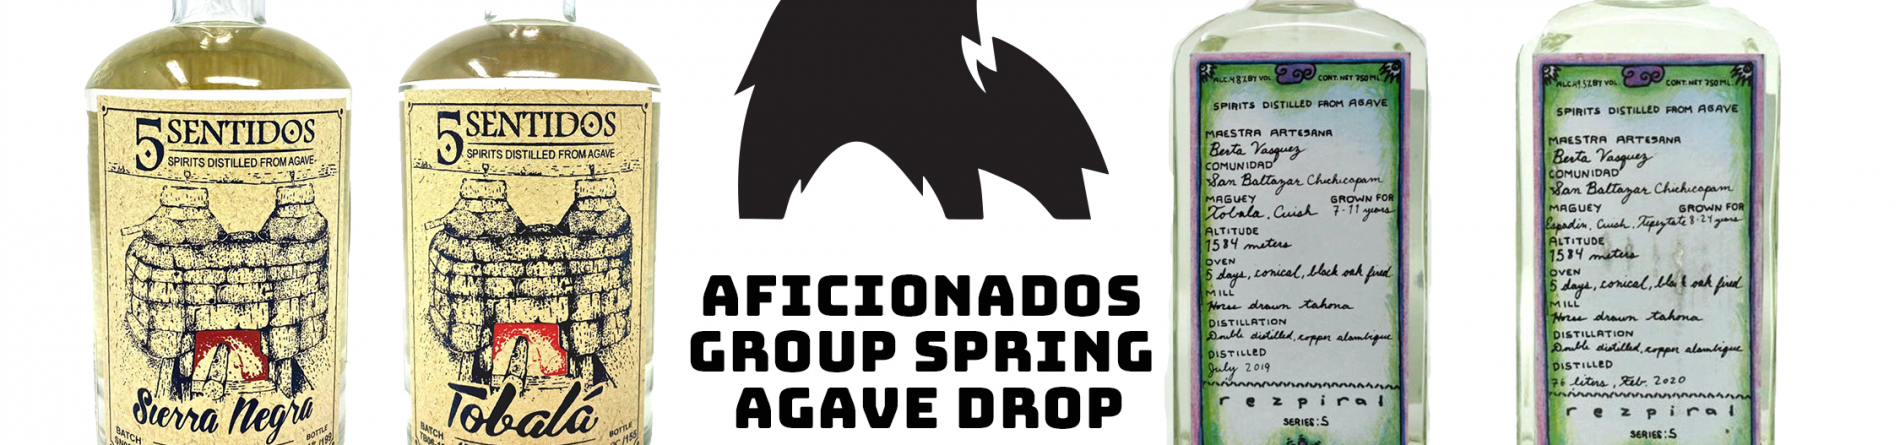 Aficionados Group 2021 Spring Agave Drop